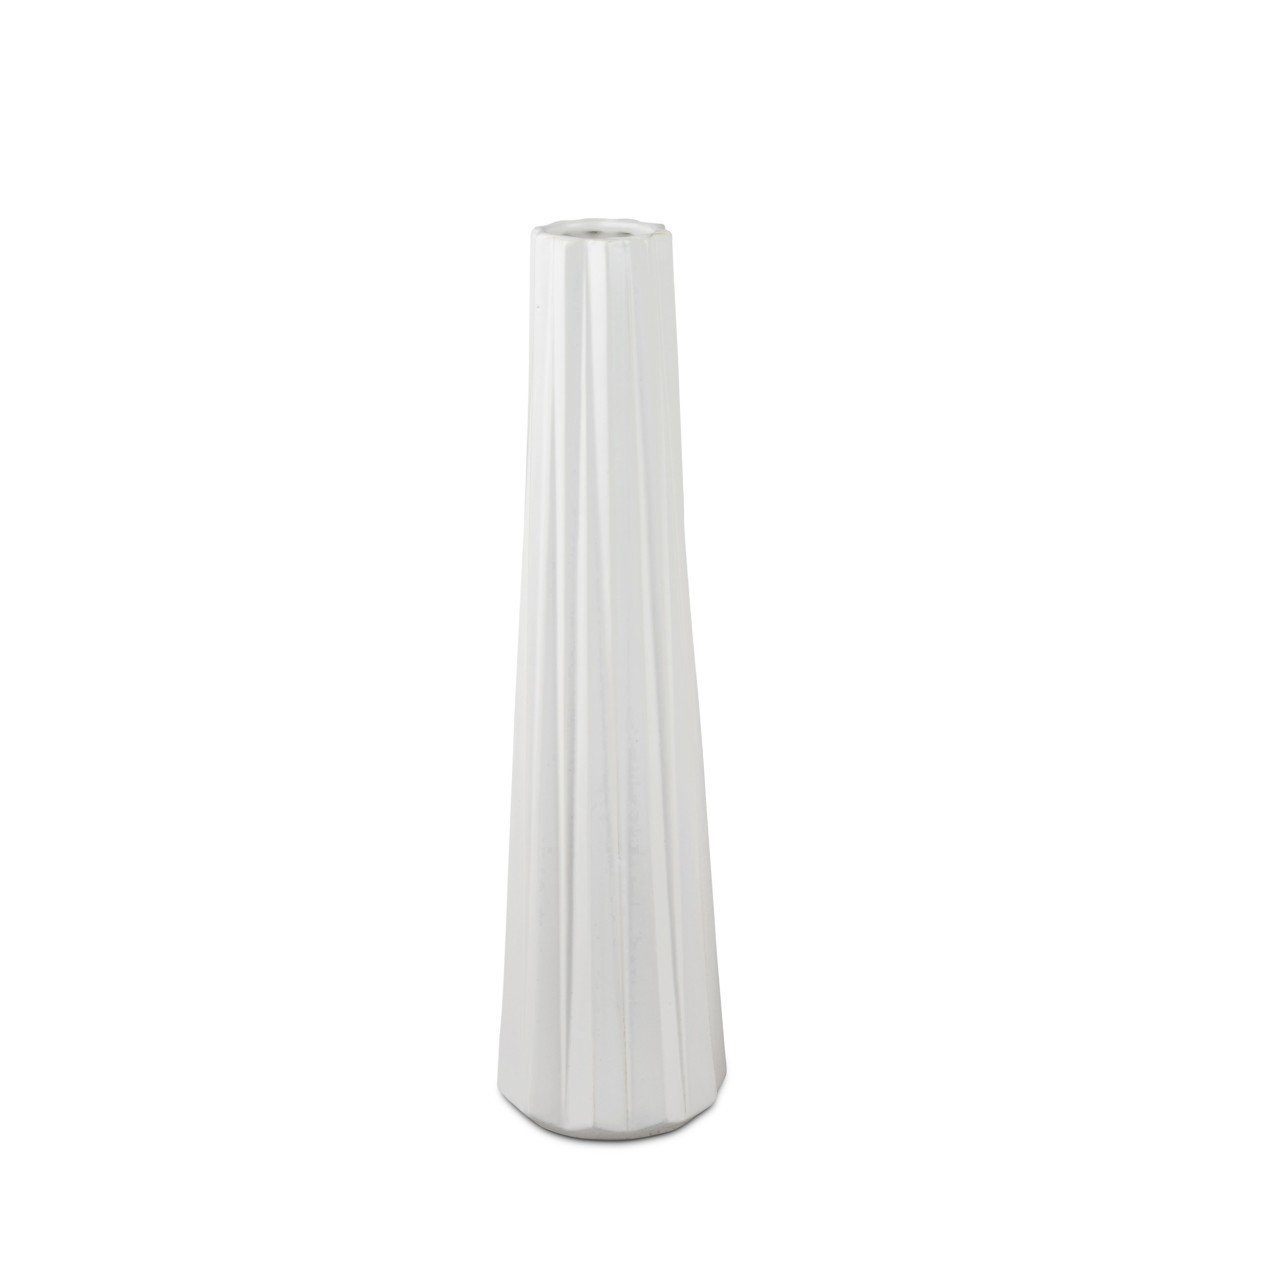 Mattweiss, Keramik formano Bodenvase Weiß H:55cm D:14cm